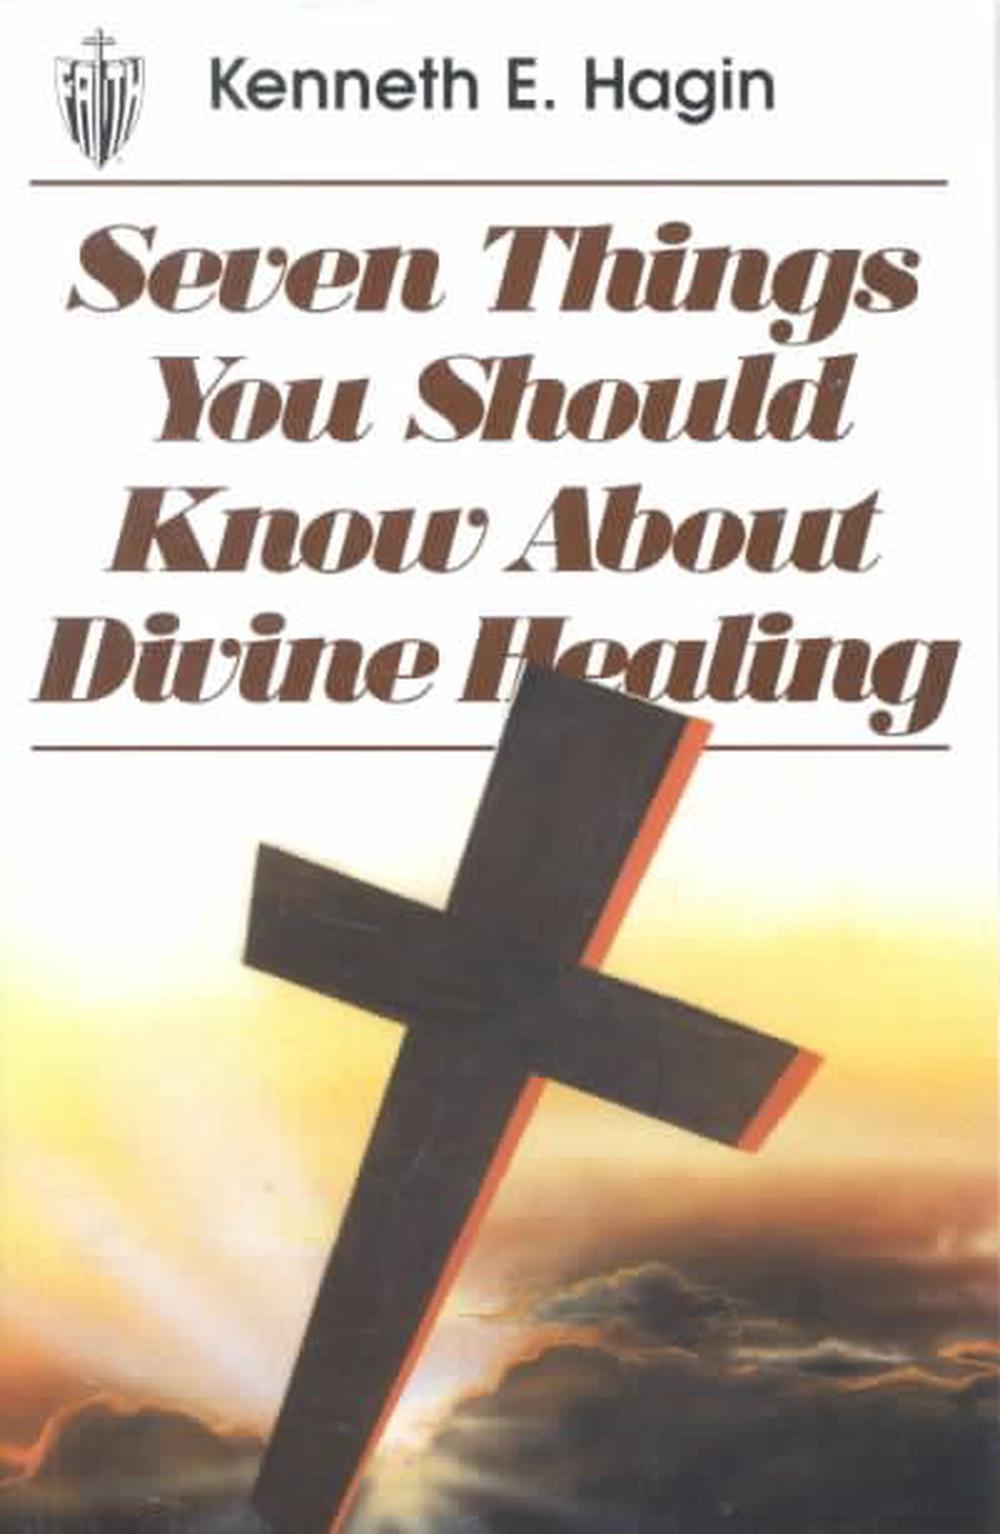 kenneth hagin healing videos